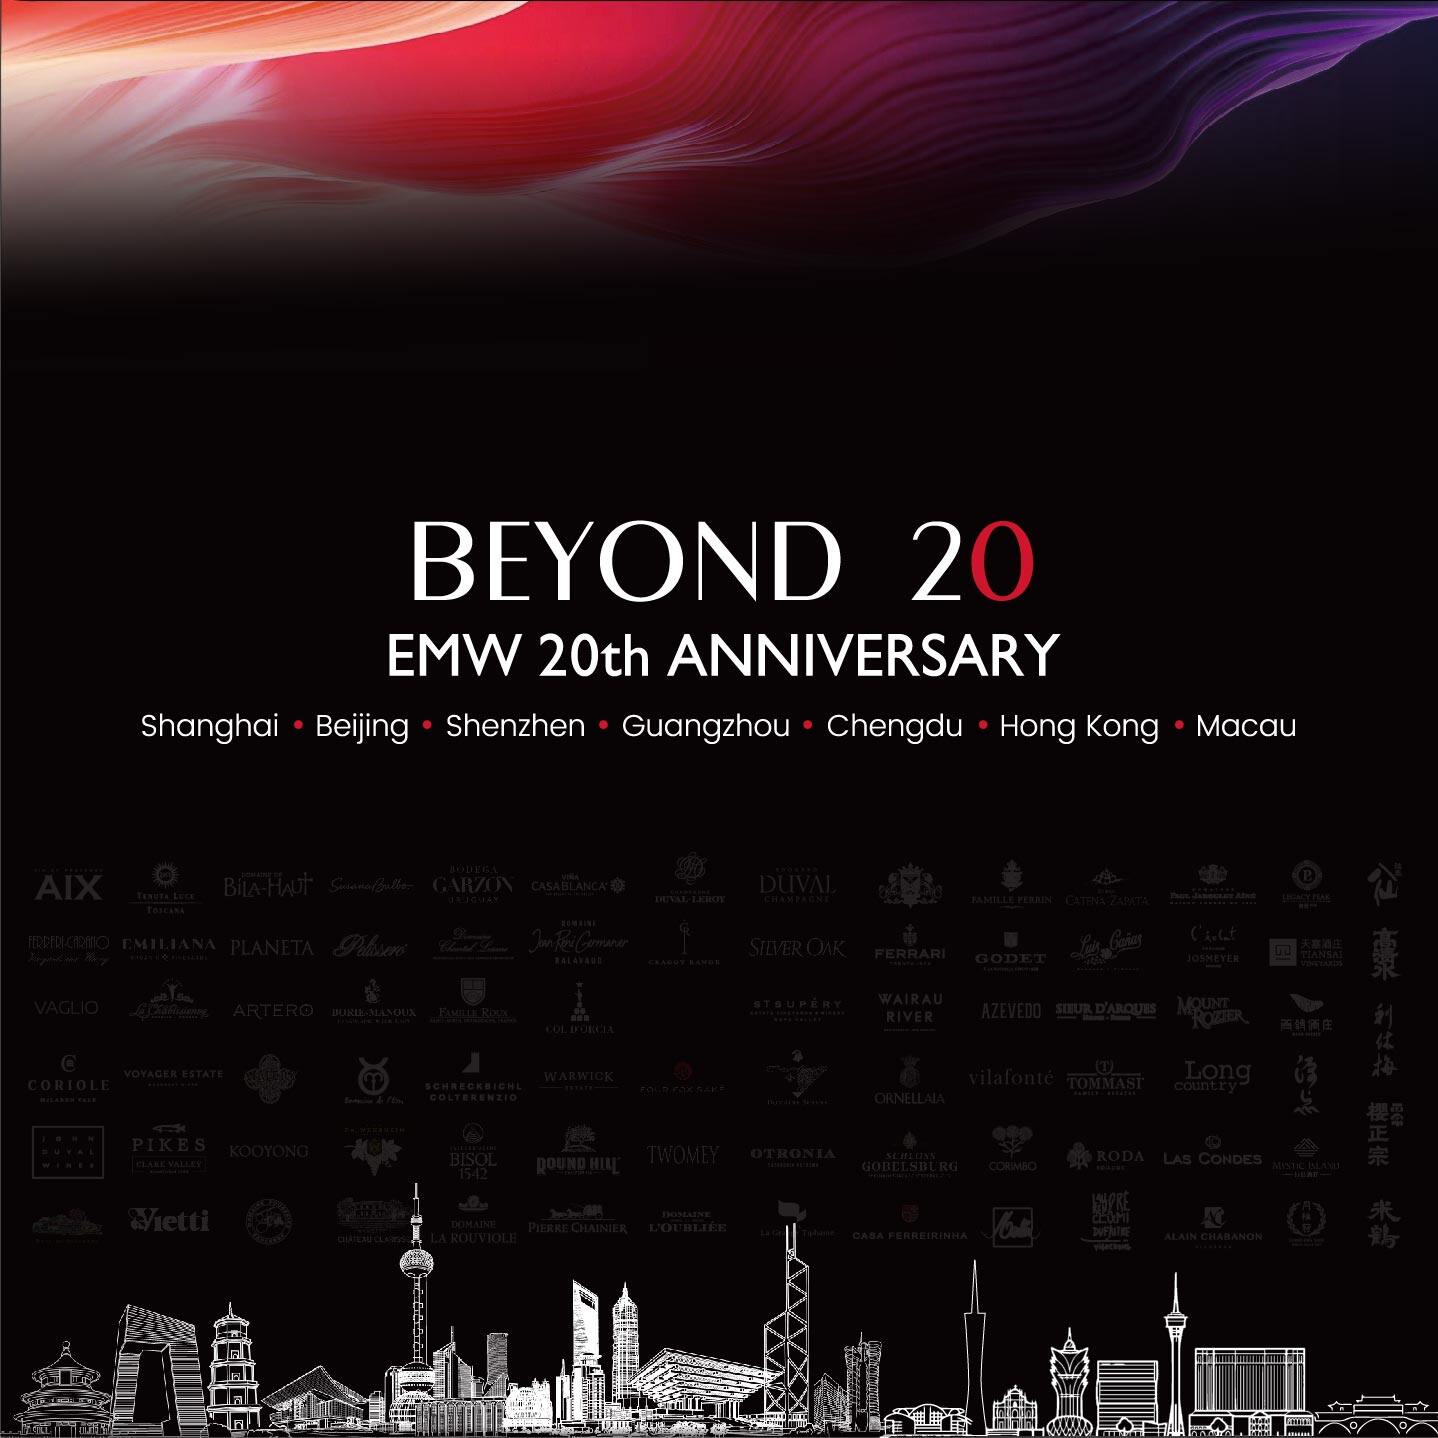 Beyond 20: EMW 20th Anniversary Celebration